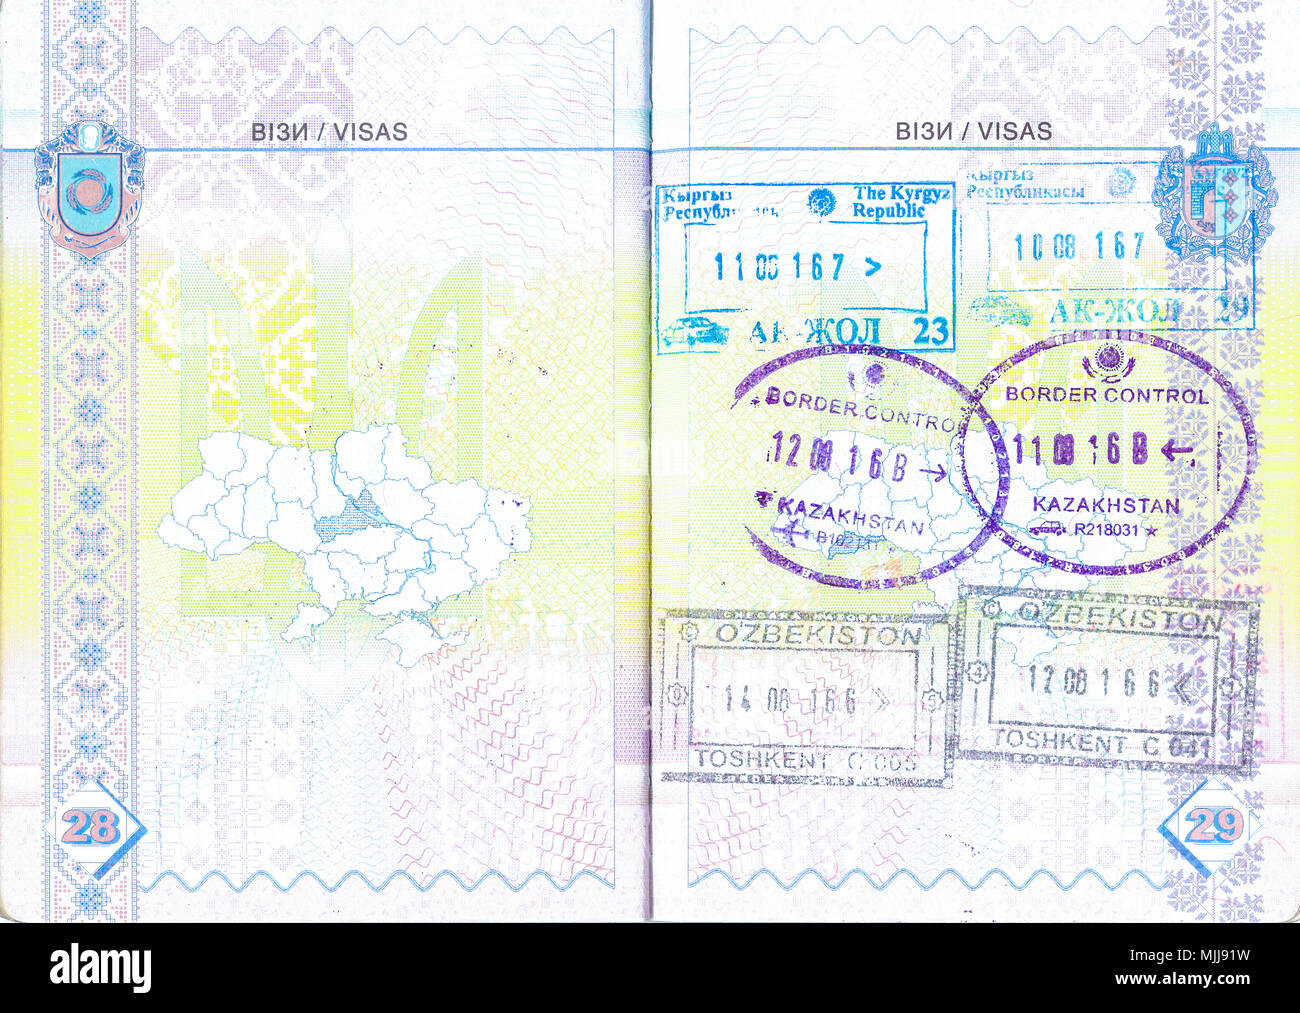 Ukrainian passport with stamps of Kyrgyzstan, Kazakhstan and Uzbekistan. Personal info removed Stock Photo